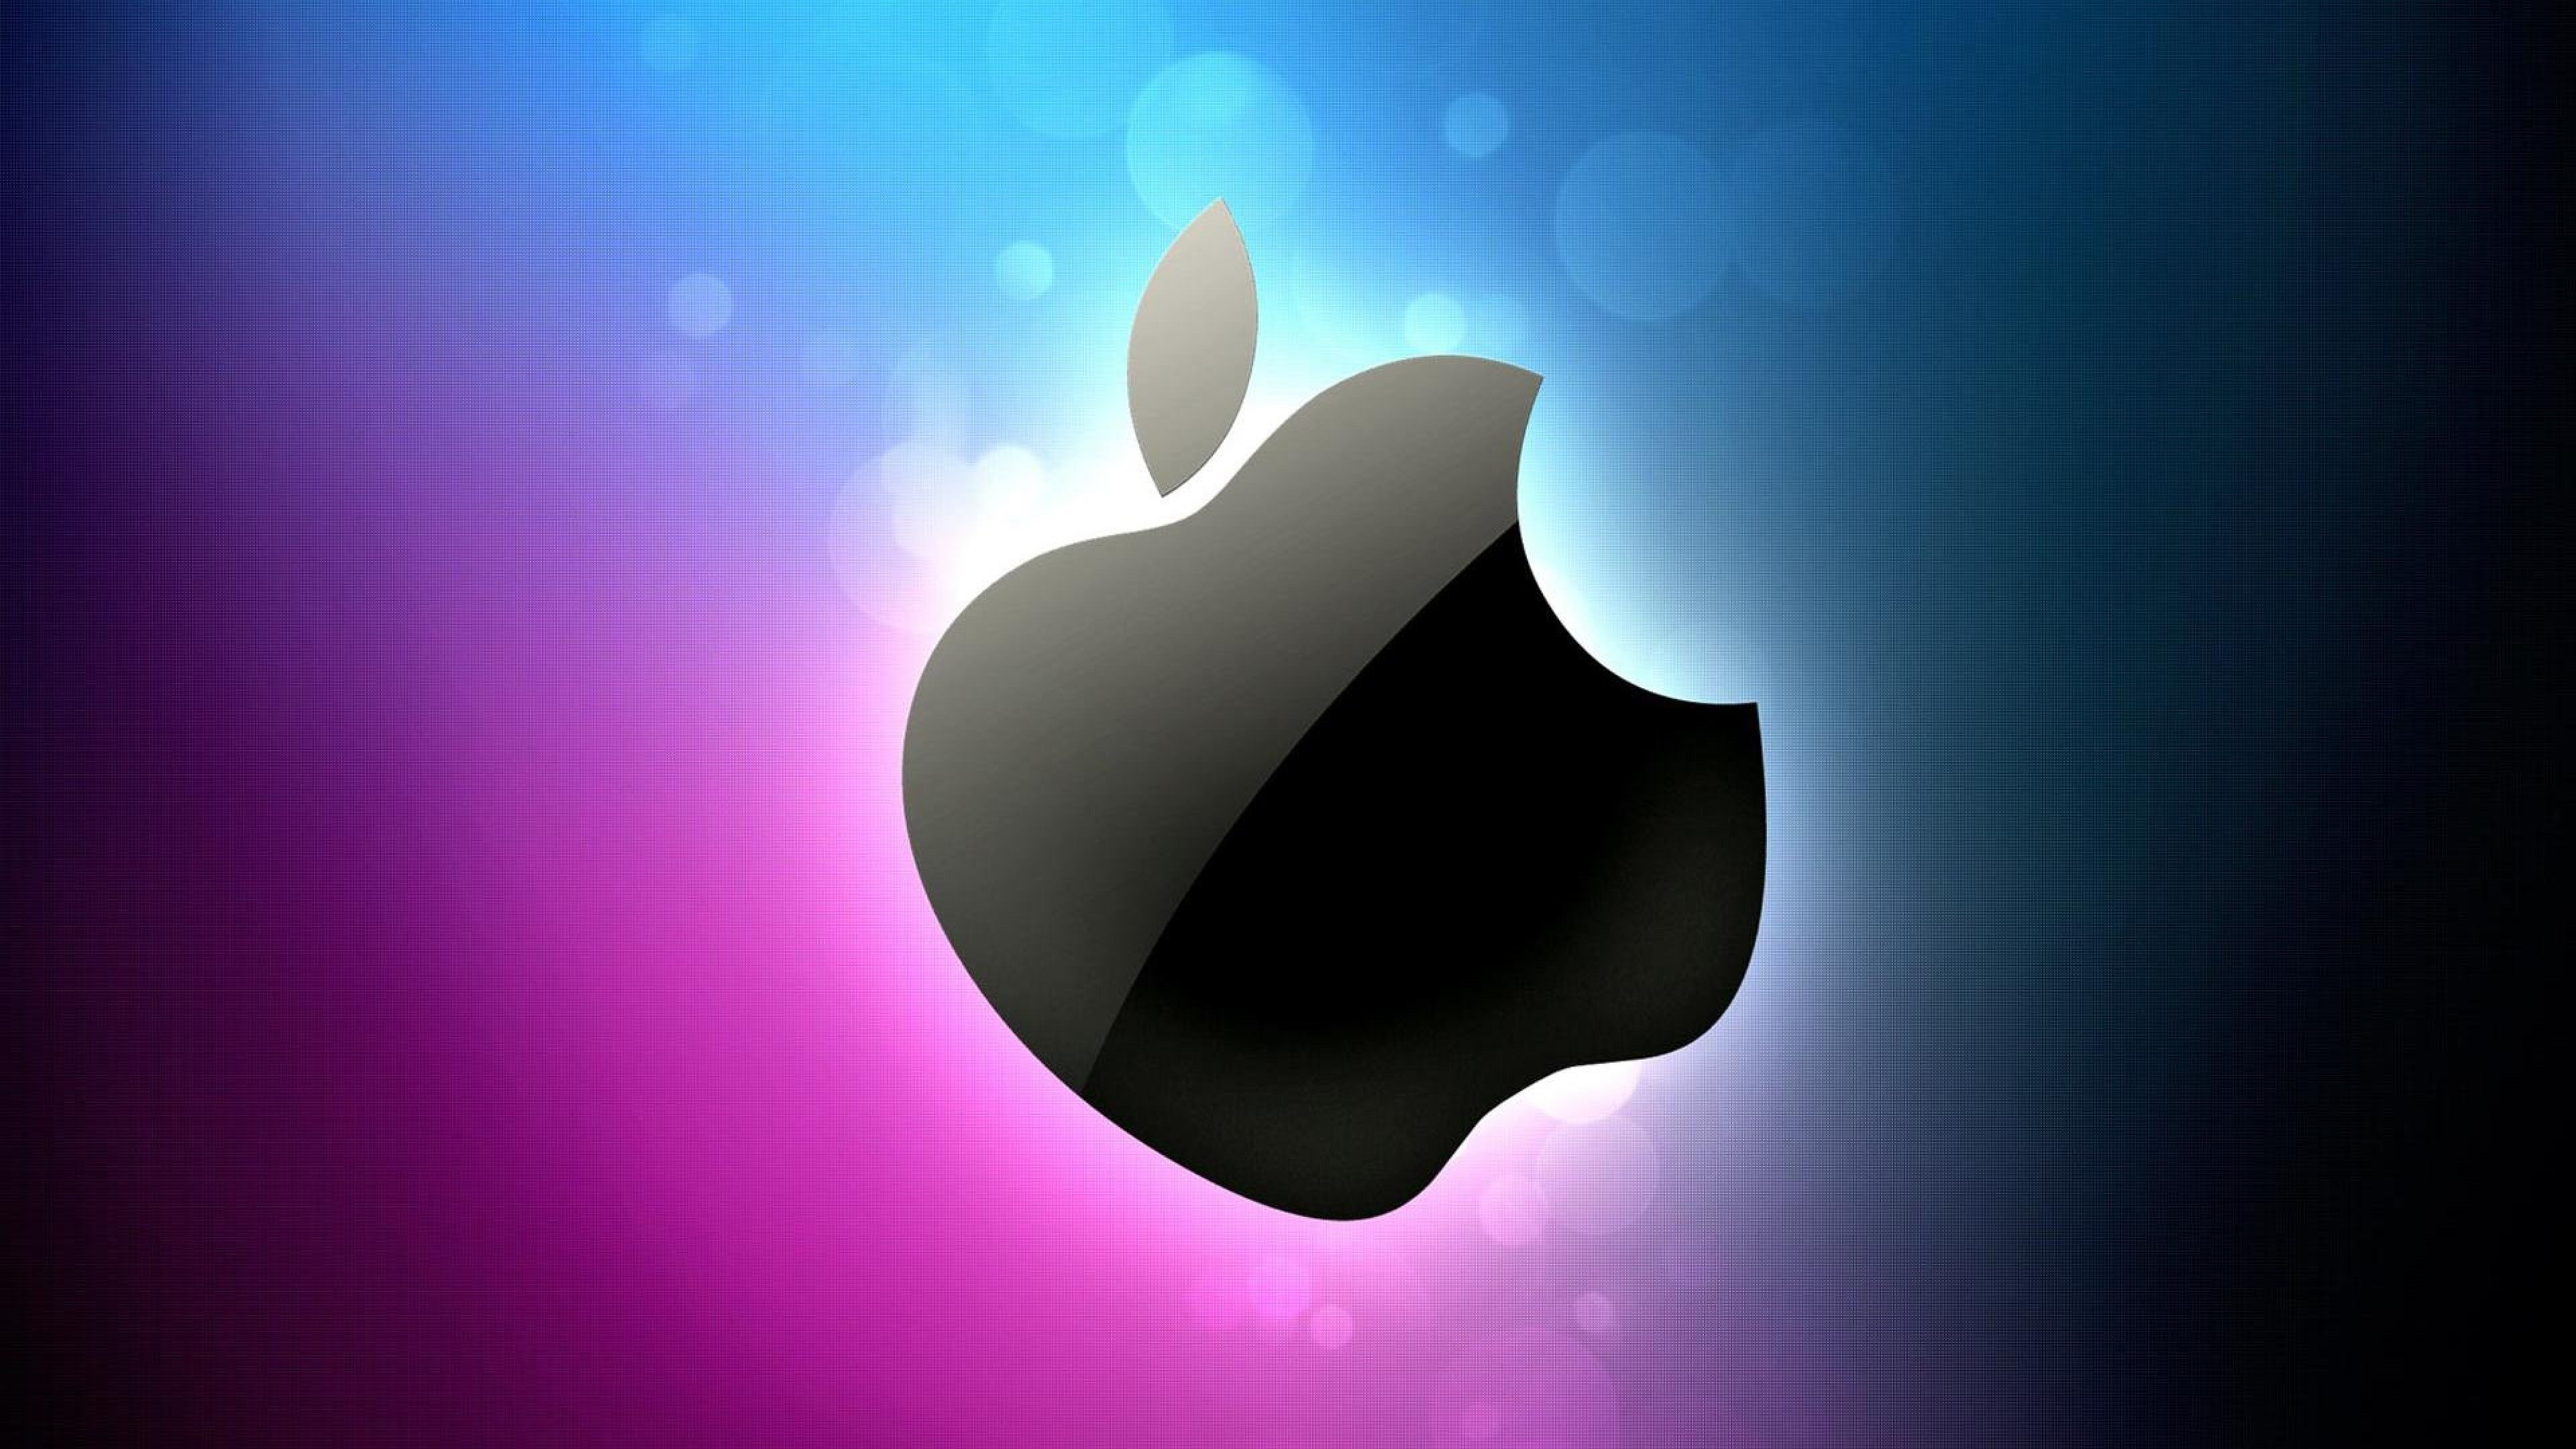 Colorful Apple Logo Wallpaper for Desktop and Mobiles 4K Ultra HD